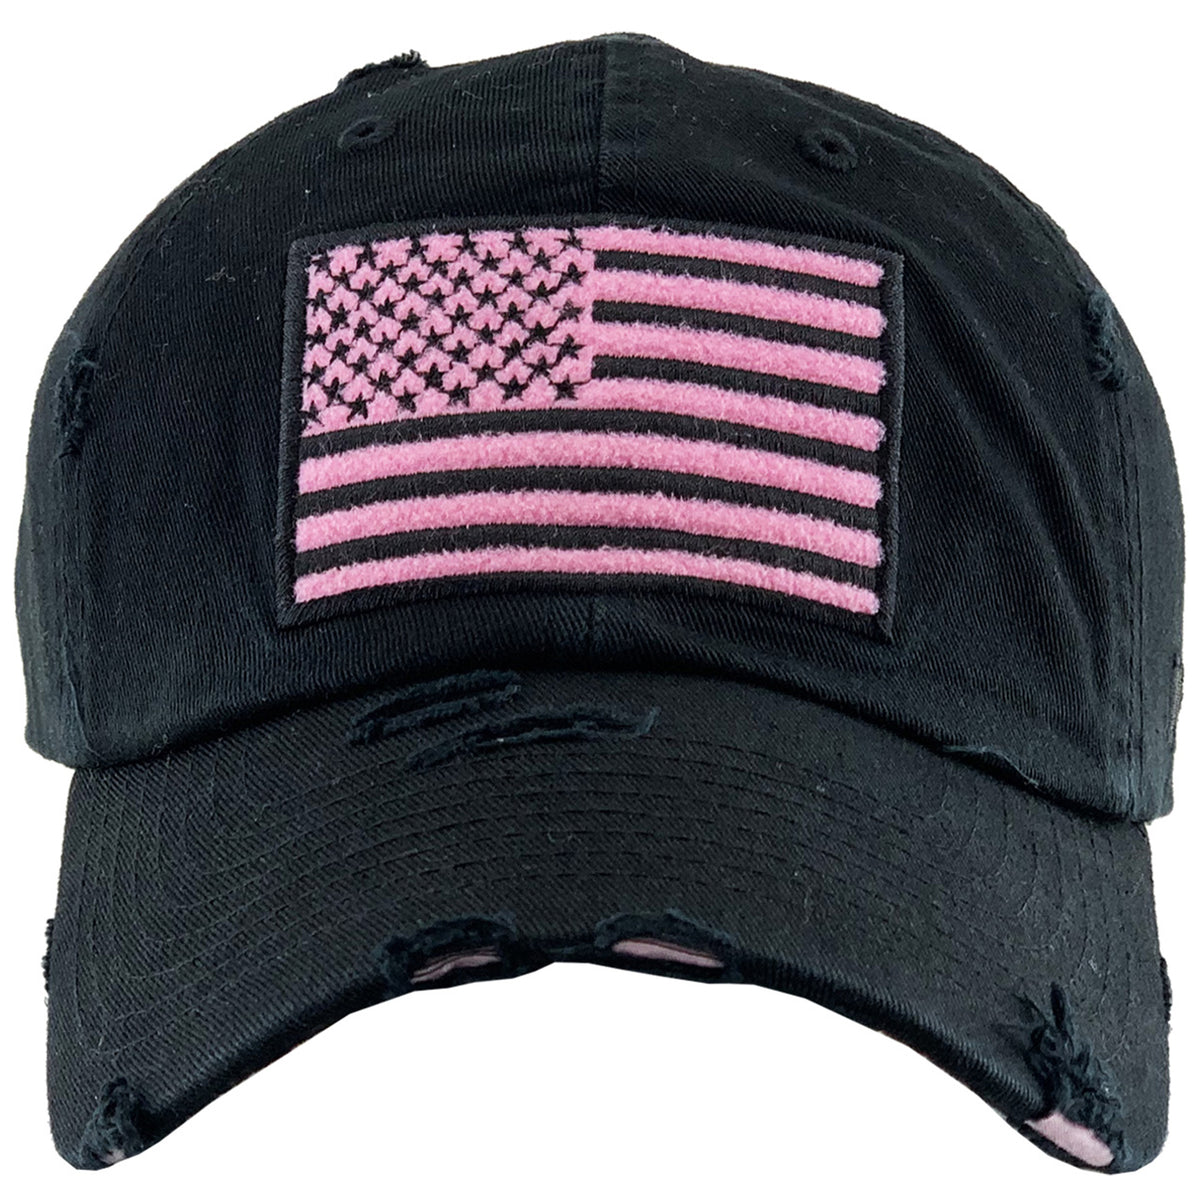 209 - American Flag Hat - Black Pink